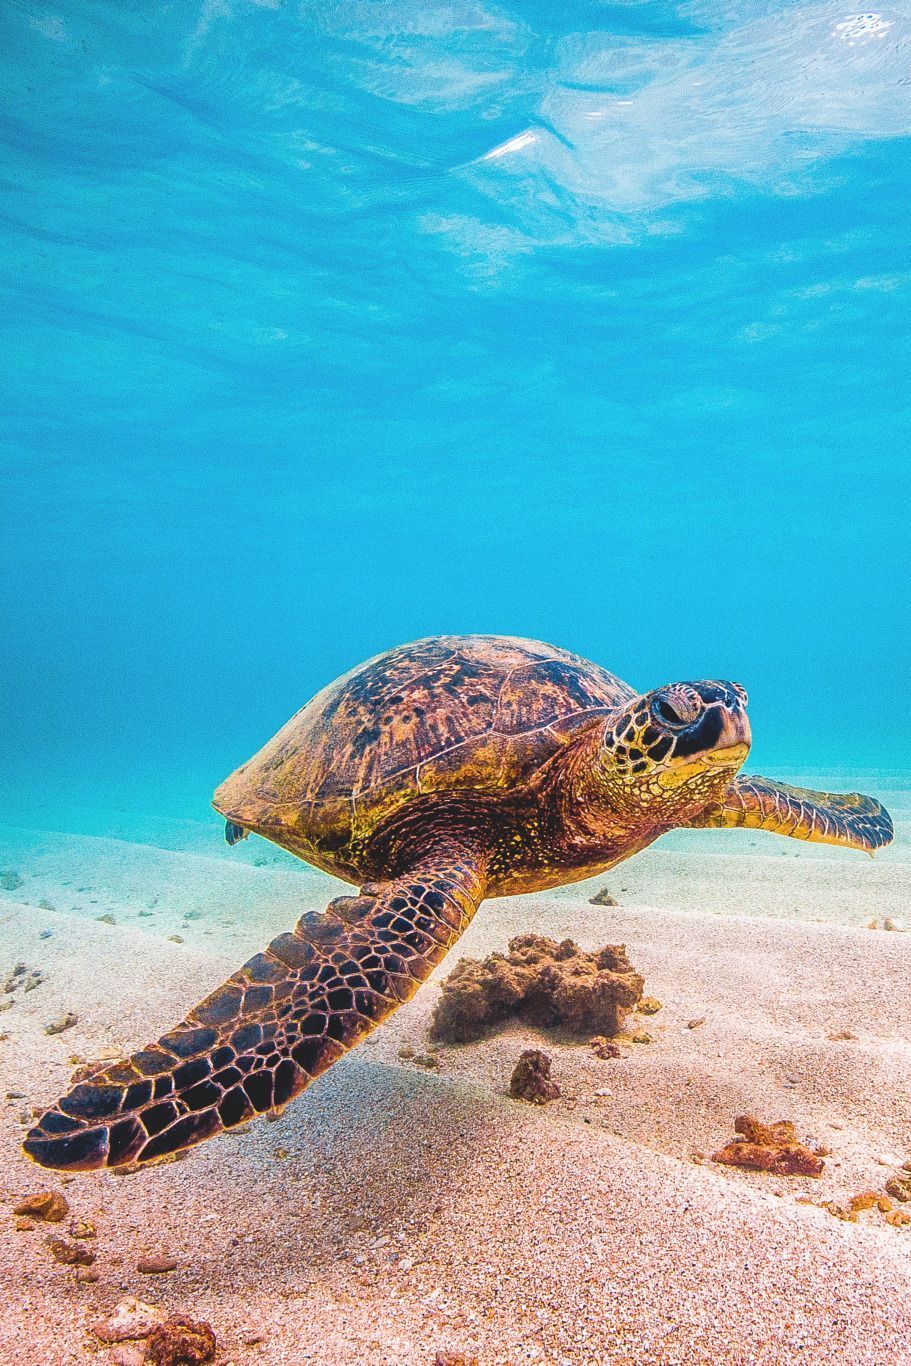 A turtle swimming in the ocean - Underwater, sea turtle, turtle, Hawaii